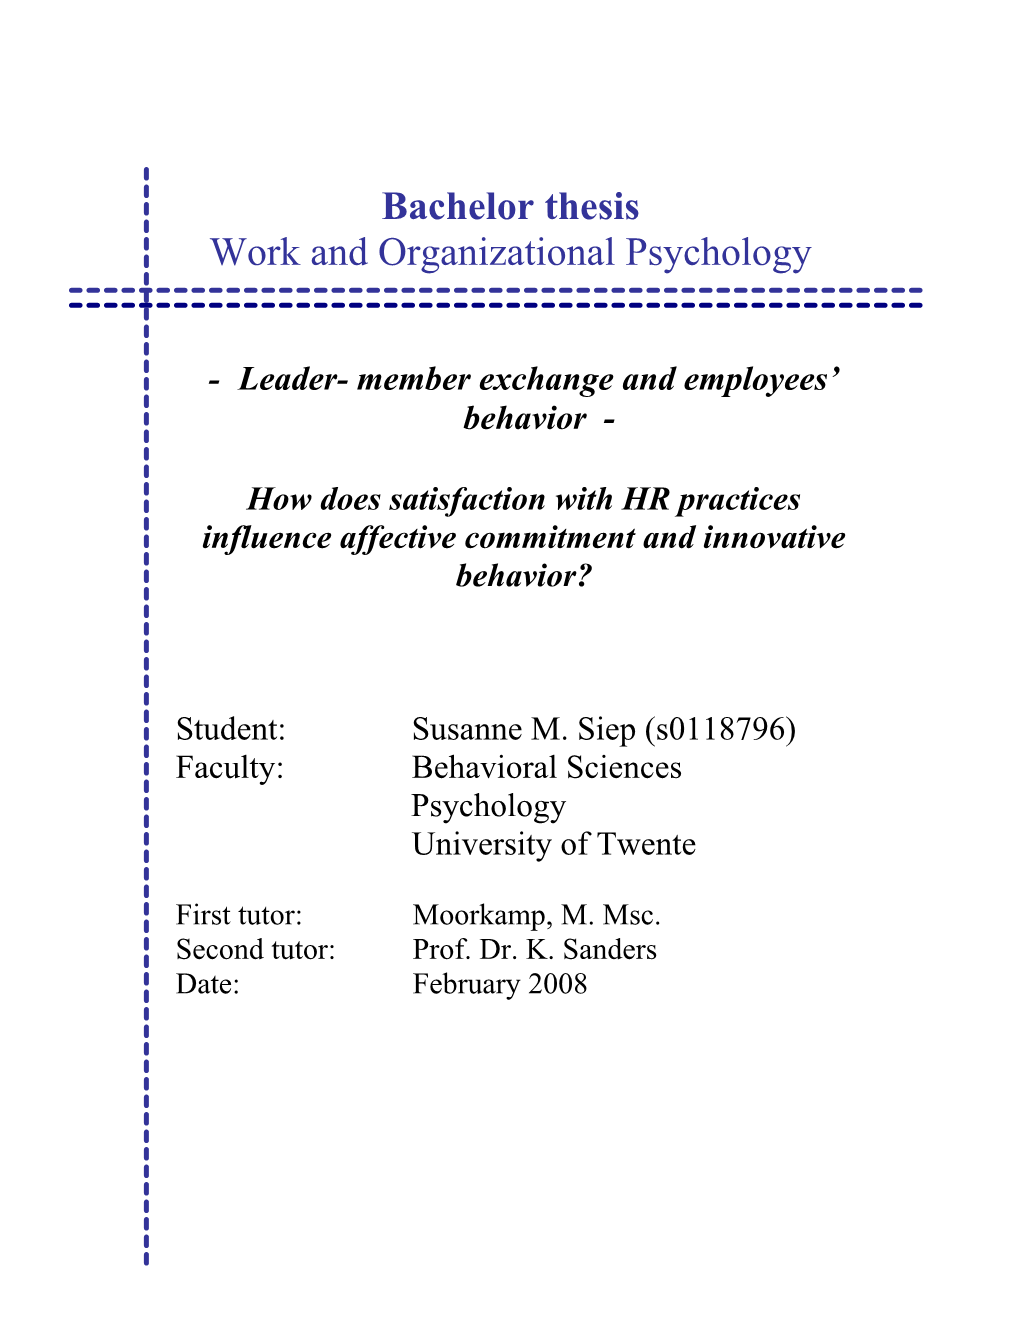 Leader-Member Exchange and Employees Behavior